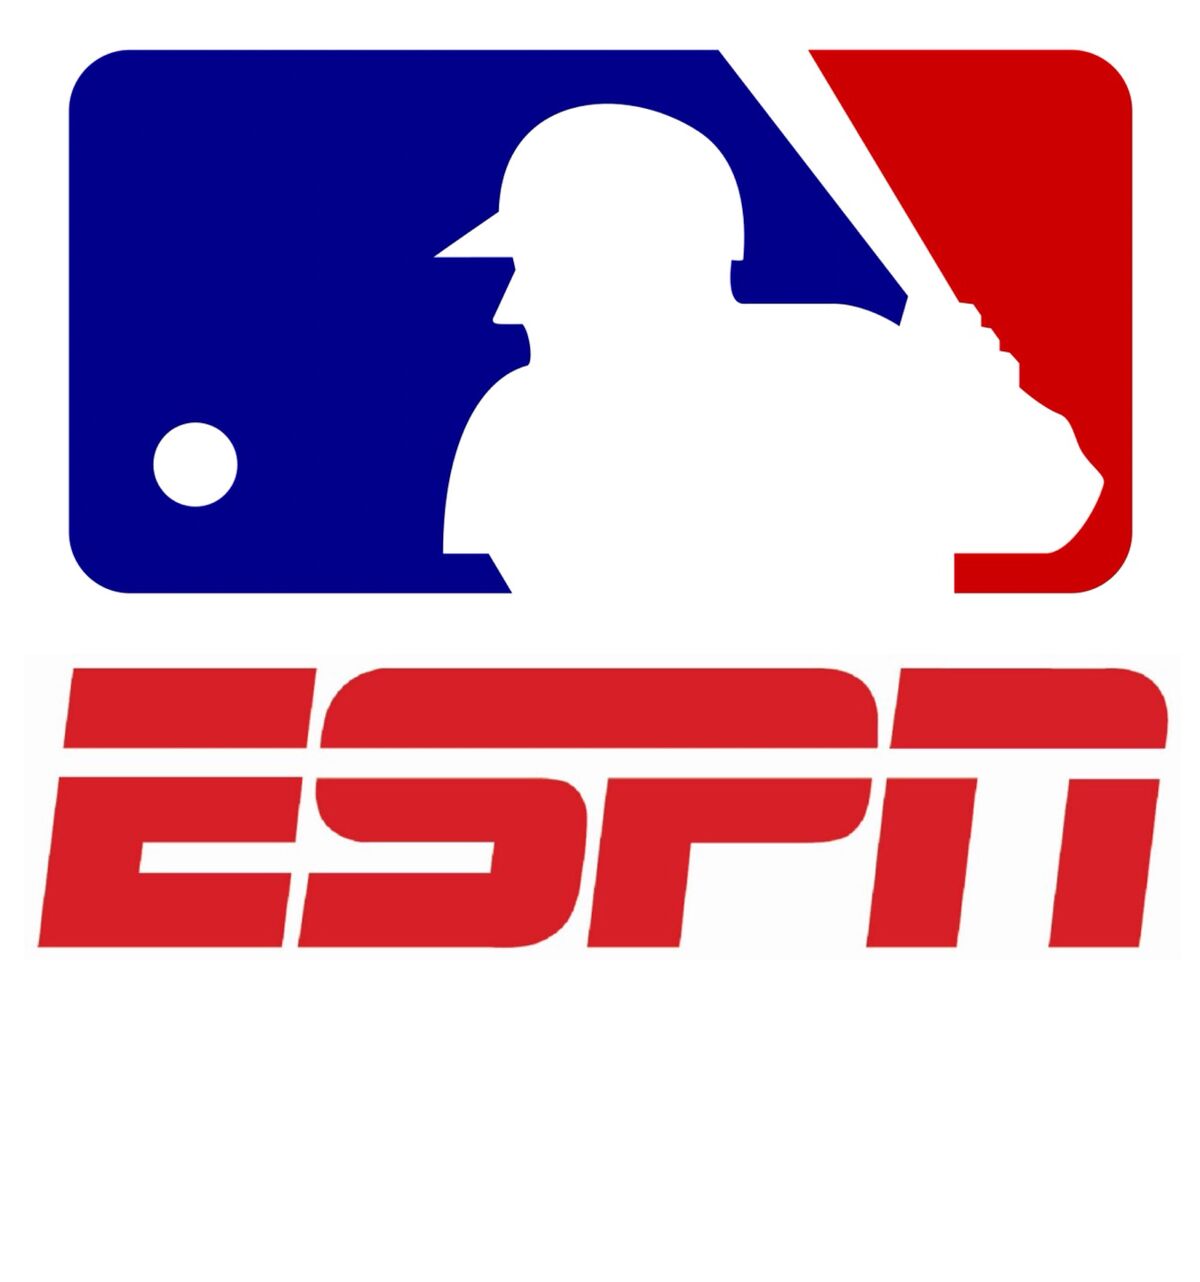 ESPN Radio to Broadcast 2014 MLB All-Star Game - ESPN Press Room U.S.